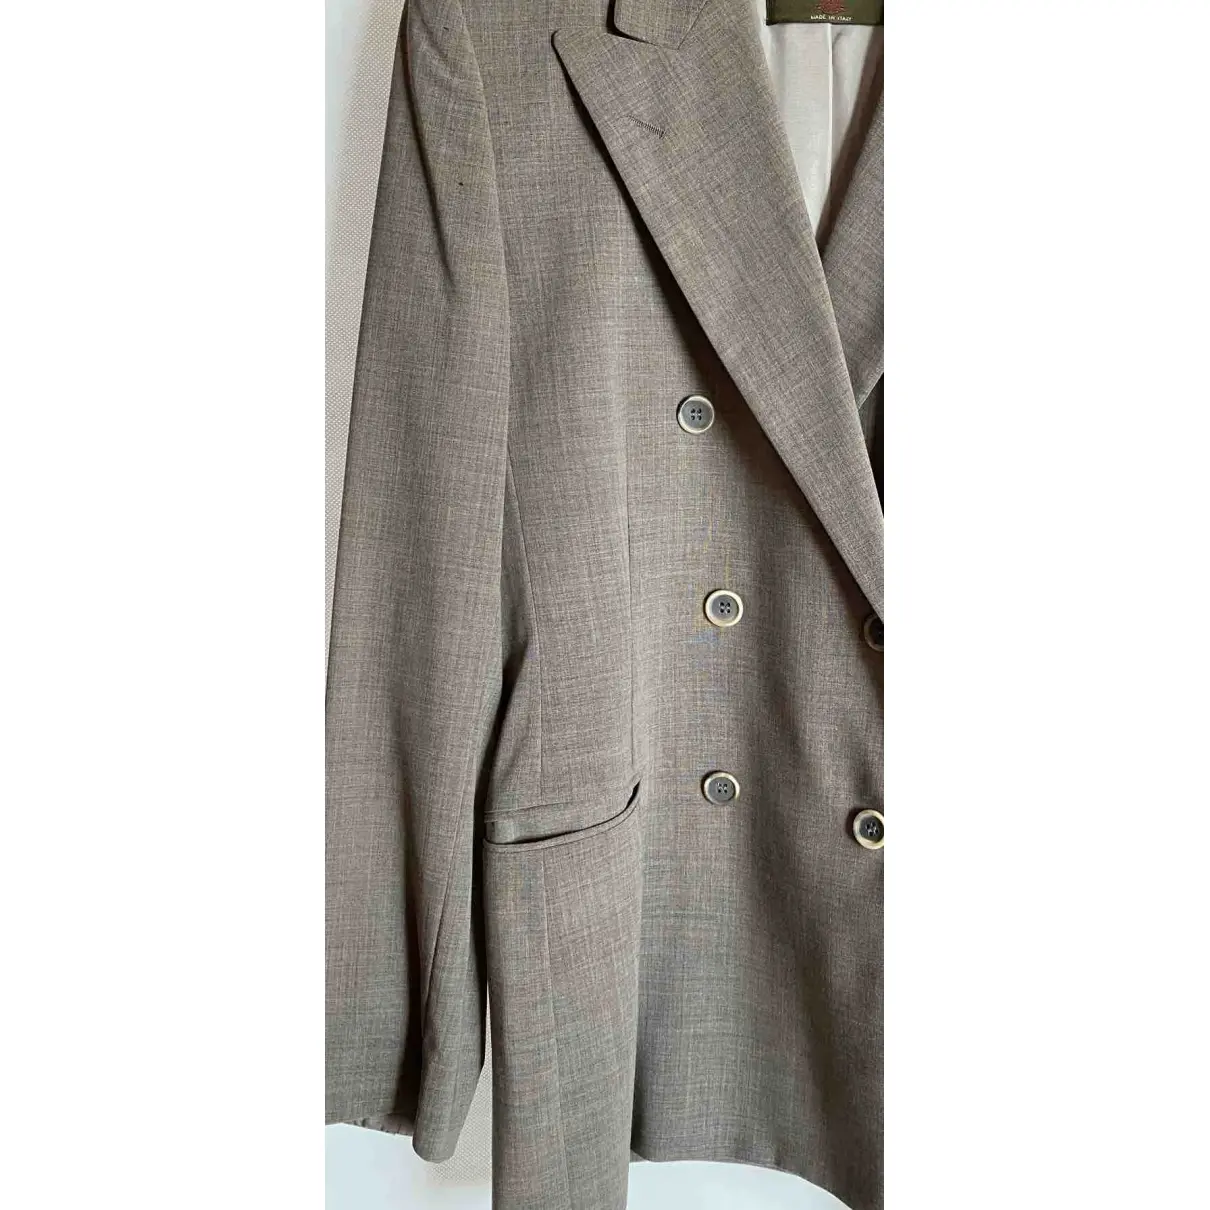 Luciano Barbera Wool blazer for sale